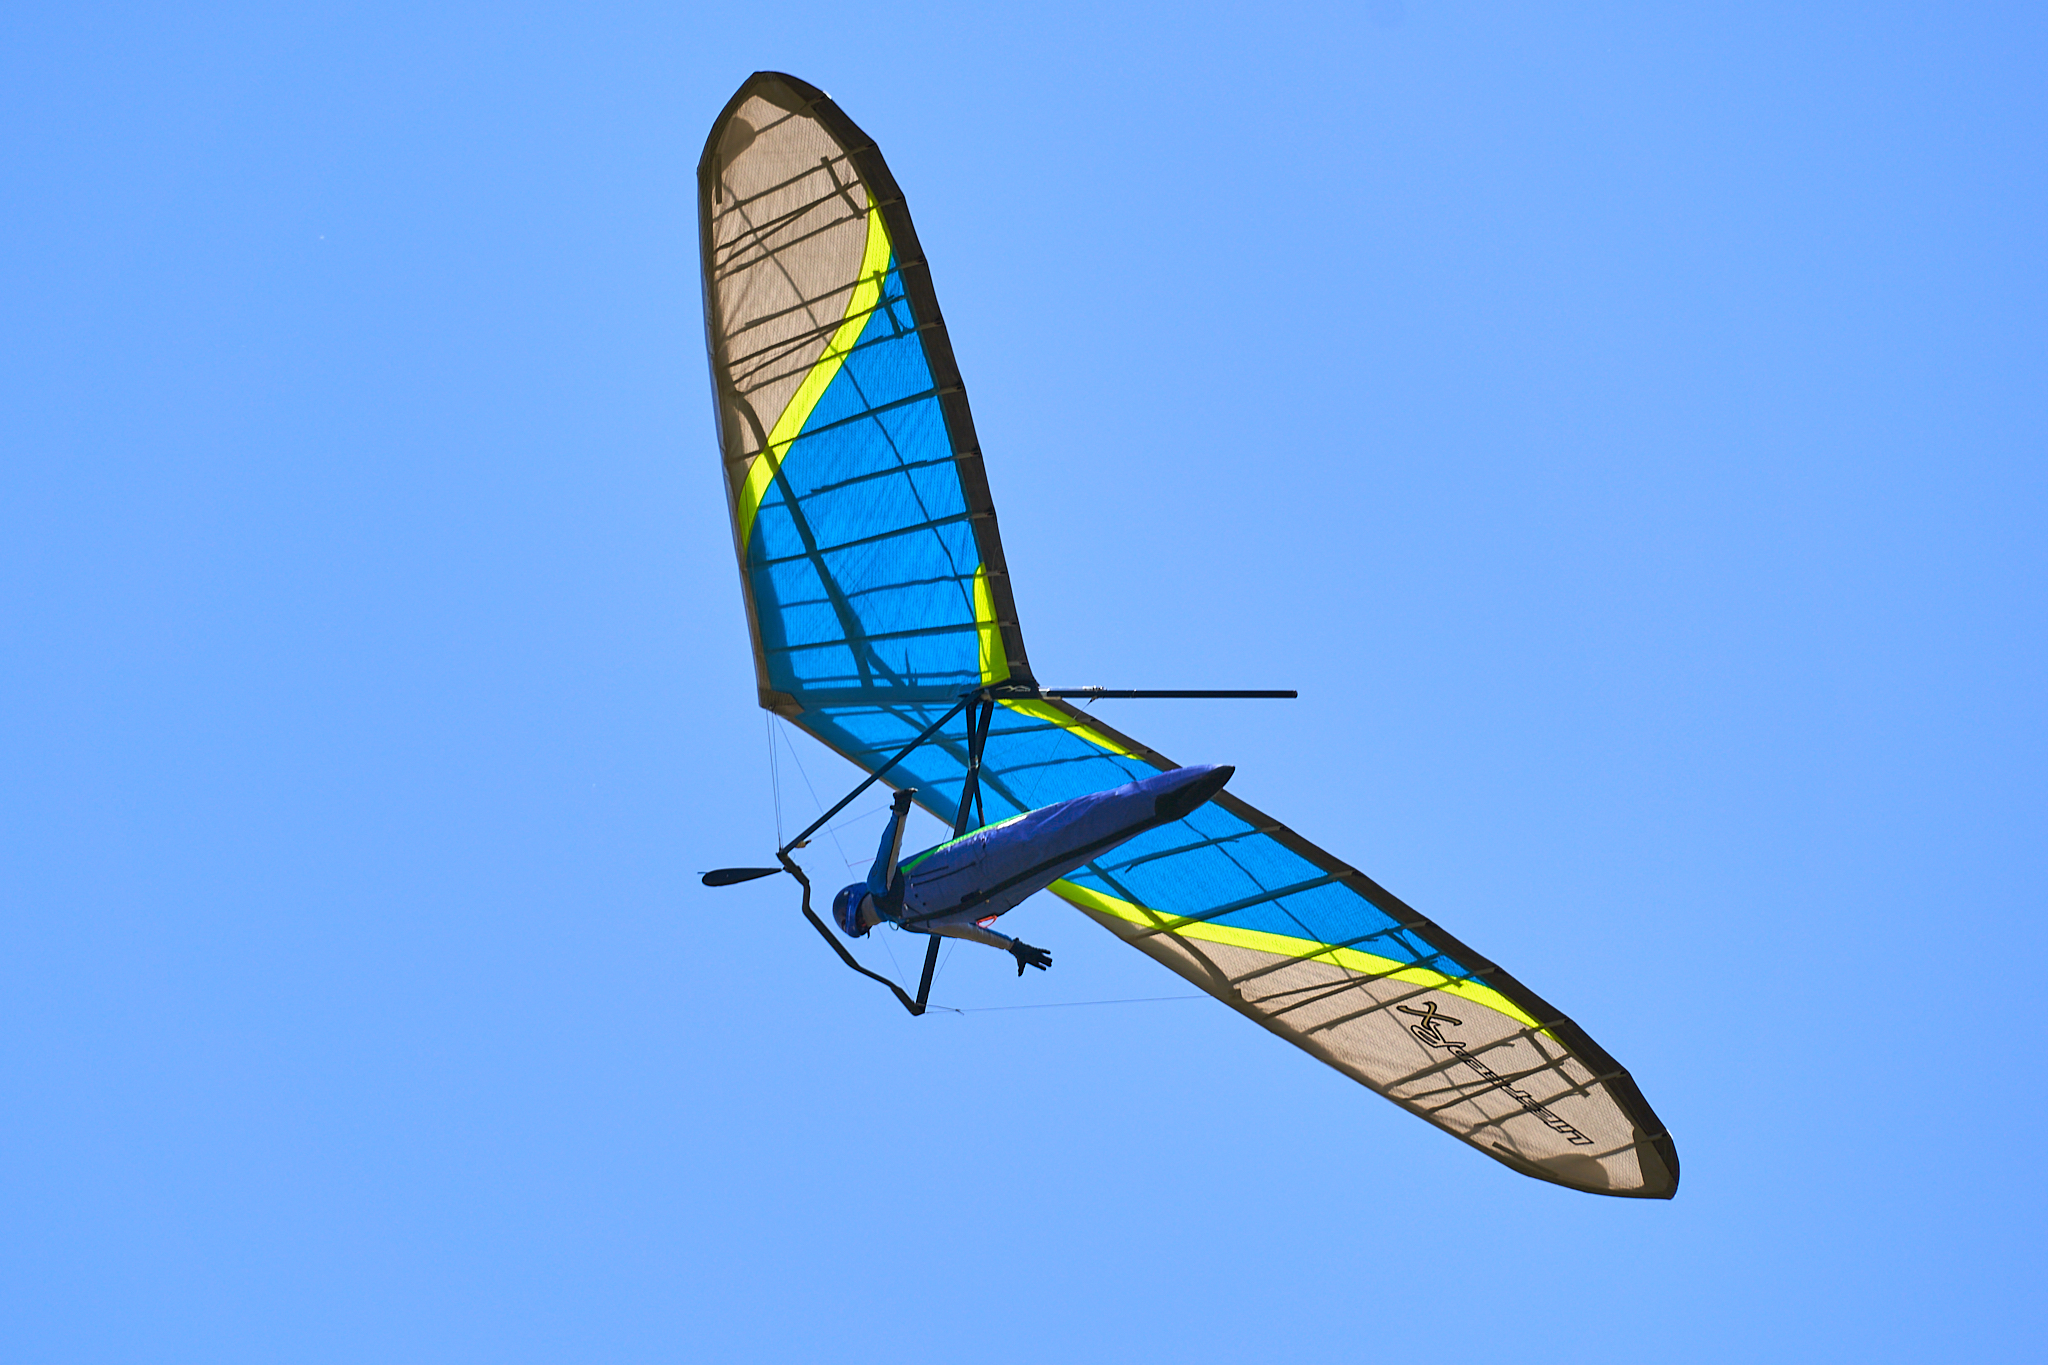 Questions to hang glider pilots - Вопросы дельтапланеристам